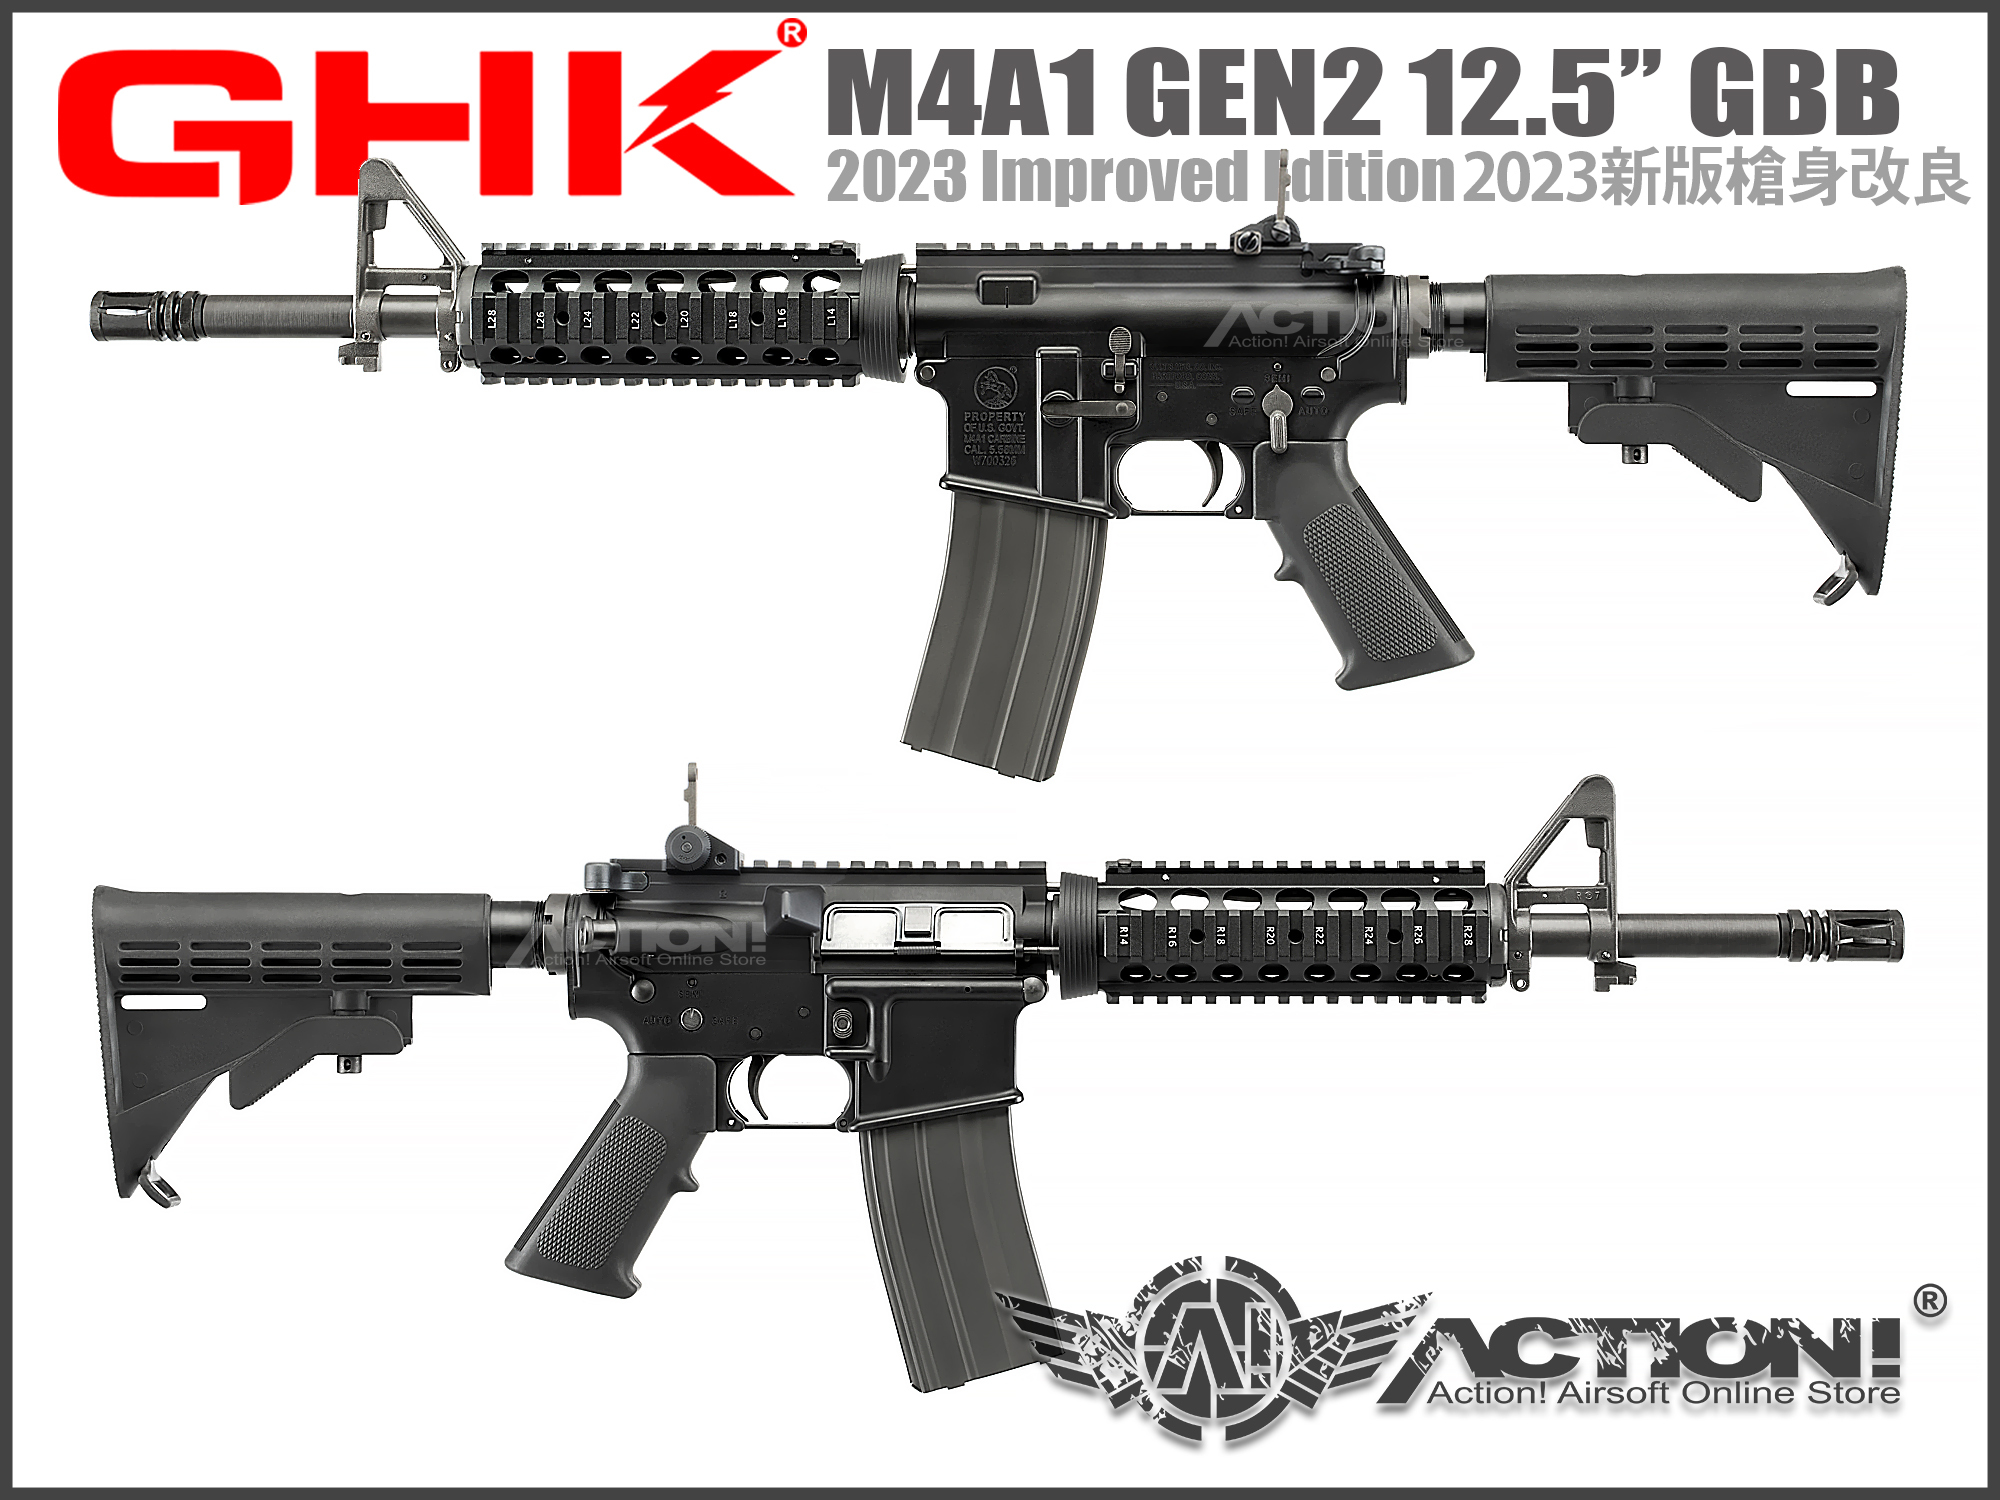 GHK - M4A1 GEN2 12.5